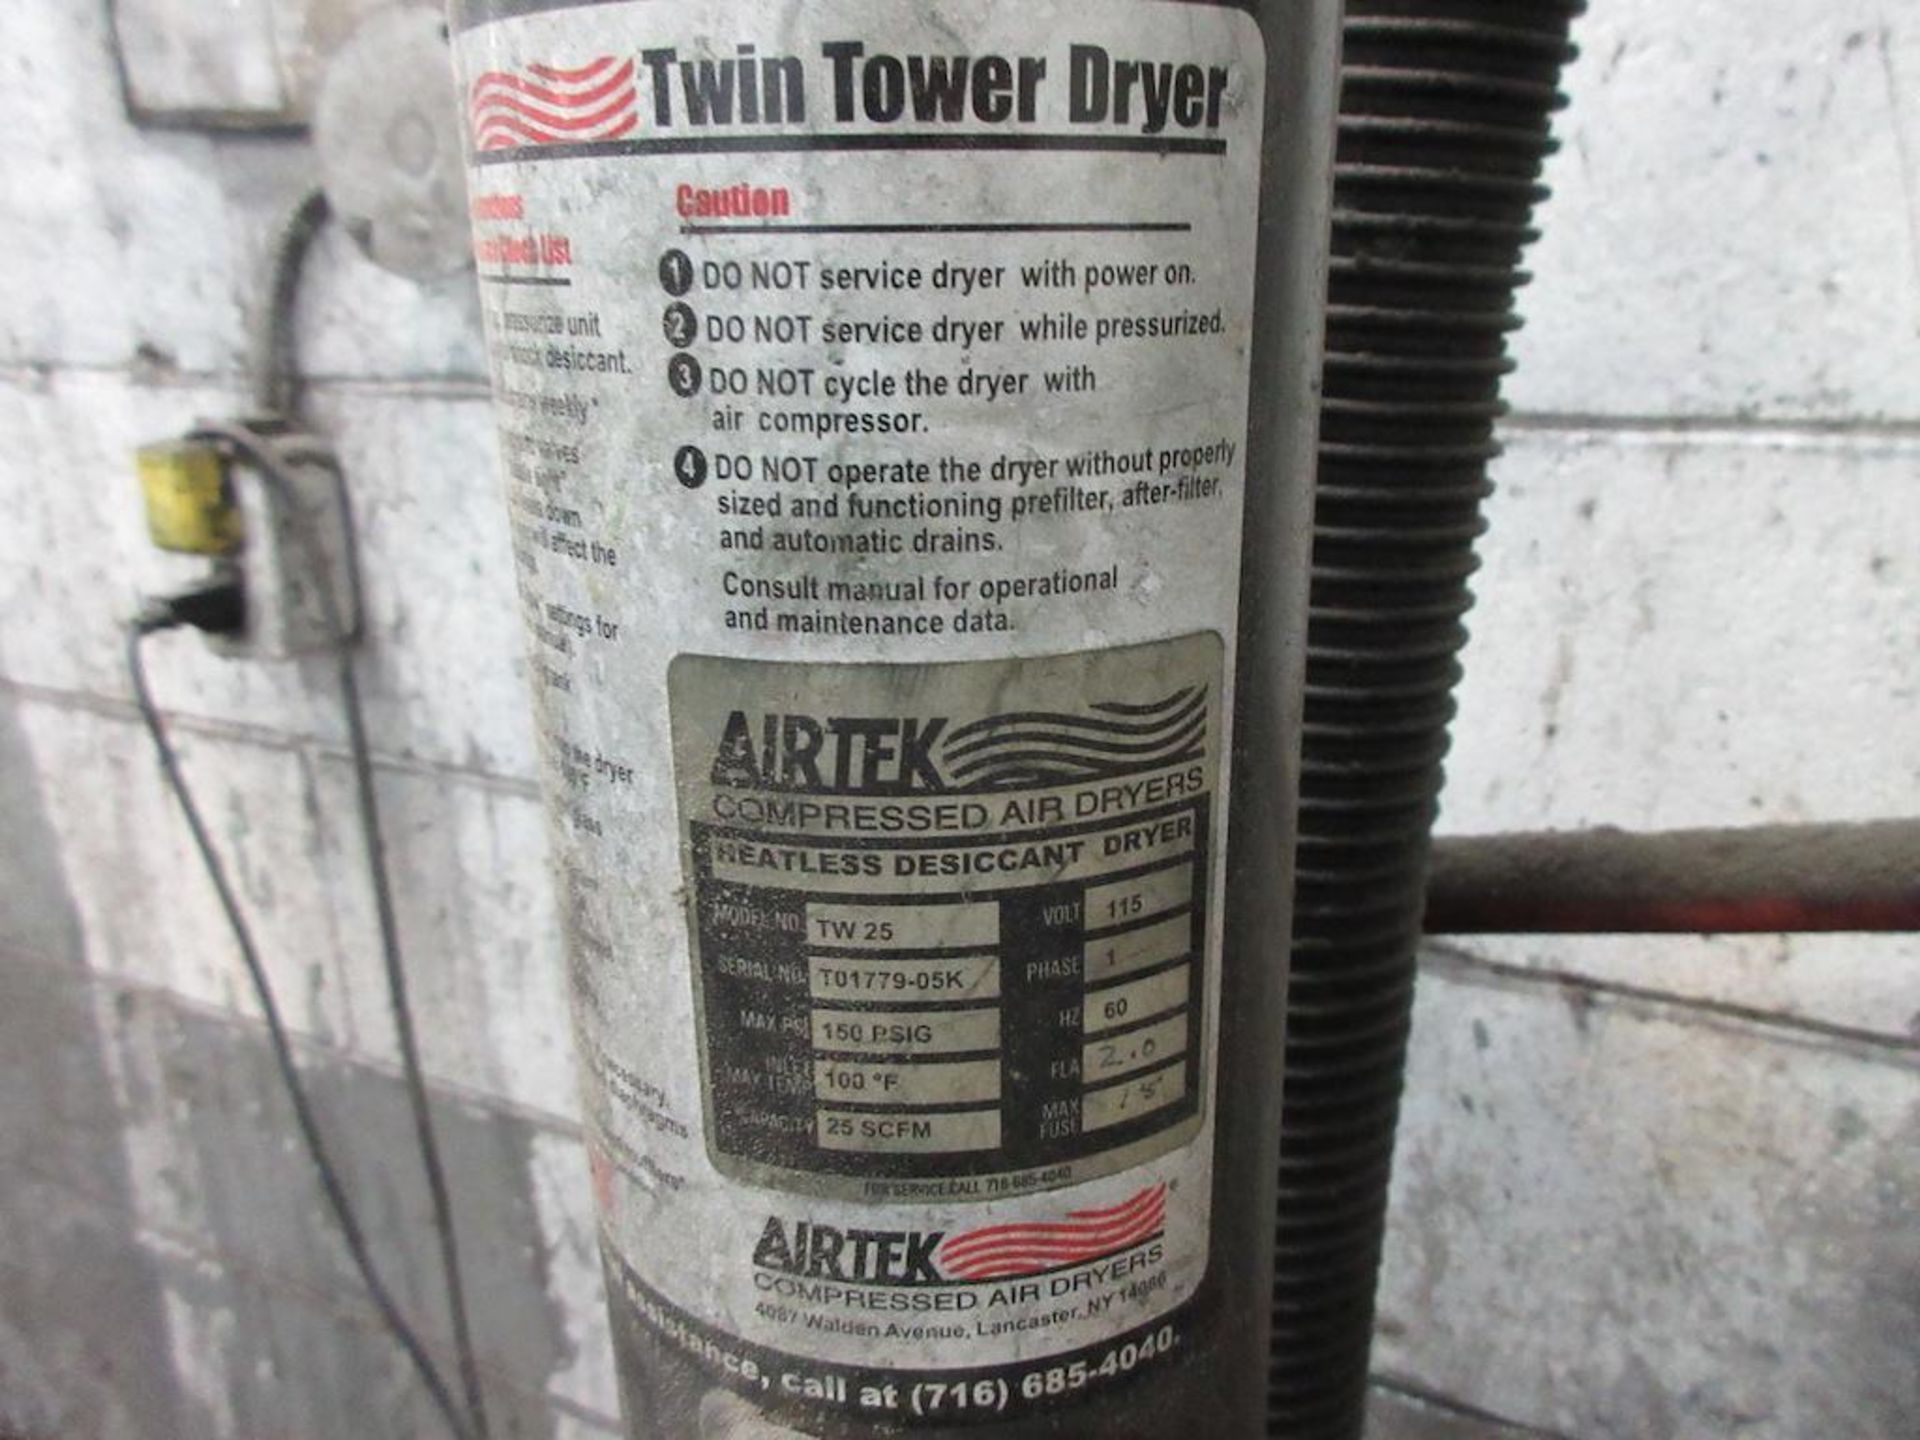 Air Tek Twin Tower Dryer, Model TW25, sn T01779-05K - Image 3 of 3